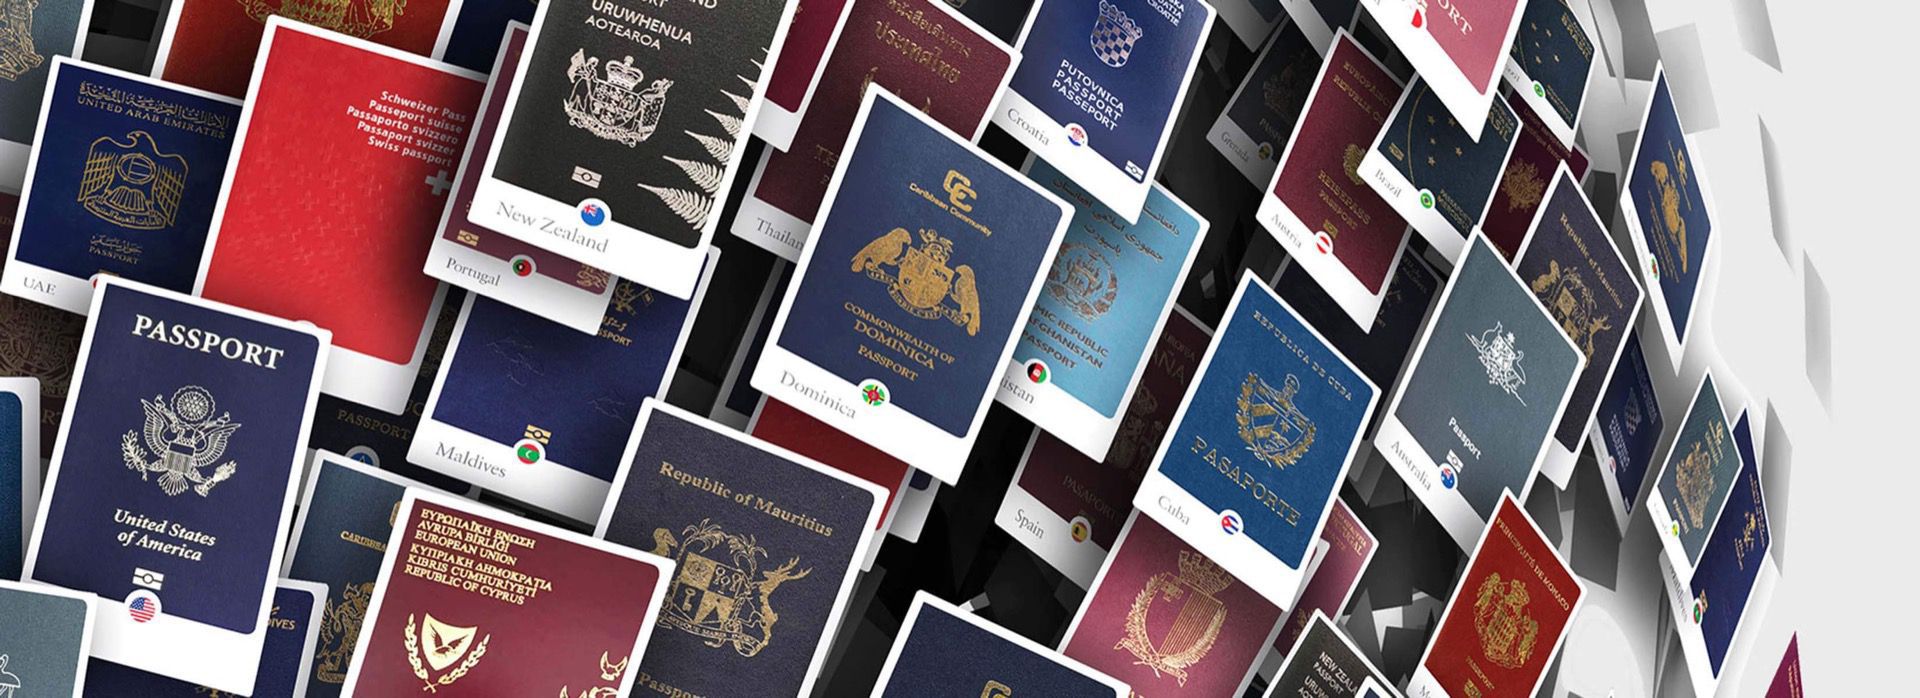 Top 10 World's Most Powerful Passports - Singapore Overtake Japan,  strongest passport in the world 